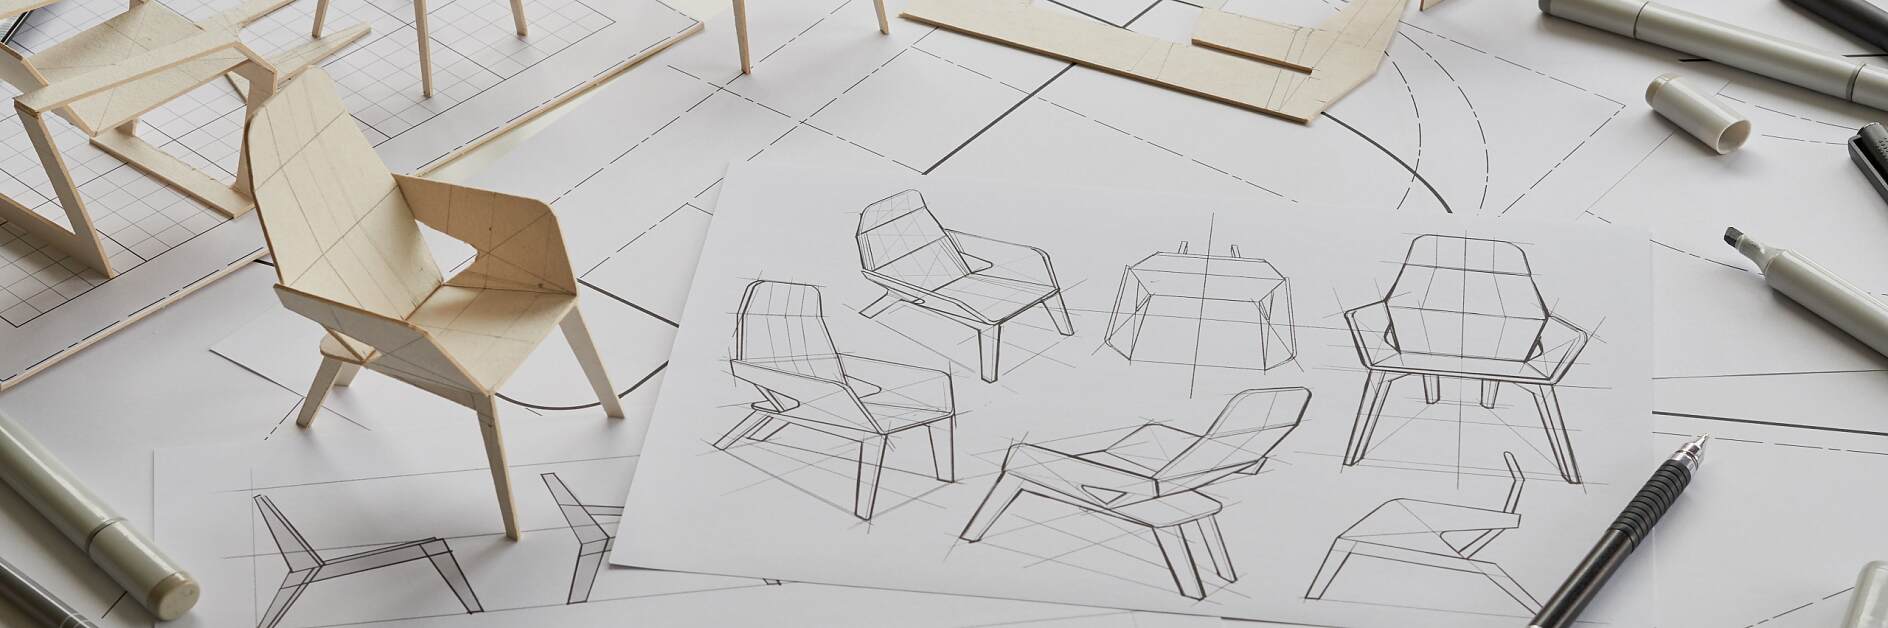 Designer sketching drawing design development product plan draft chair armchair Wingback Interior furniture prototype manufacturing production. designer studio concept .